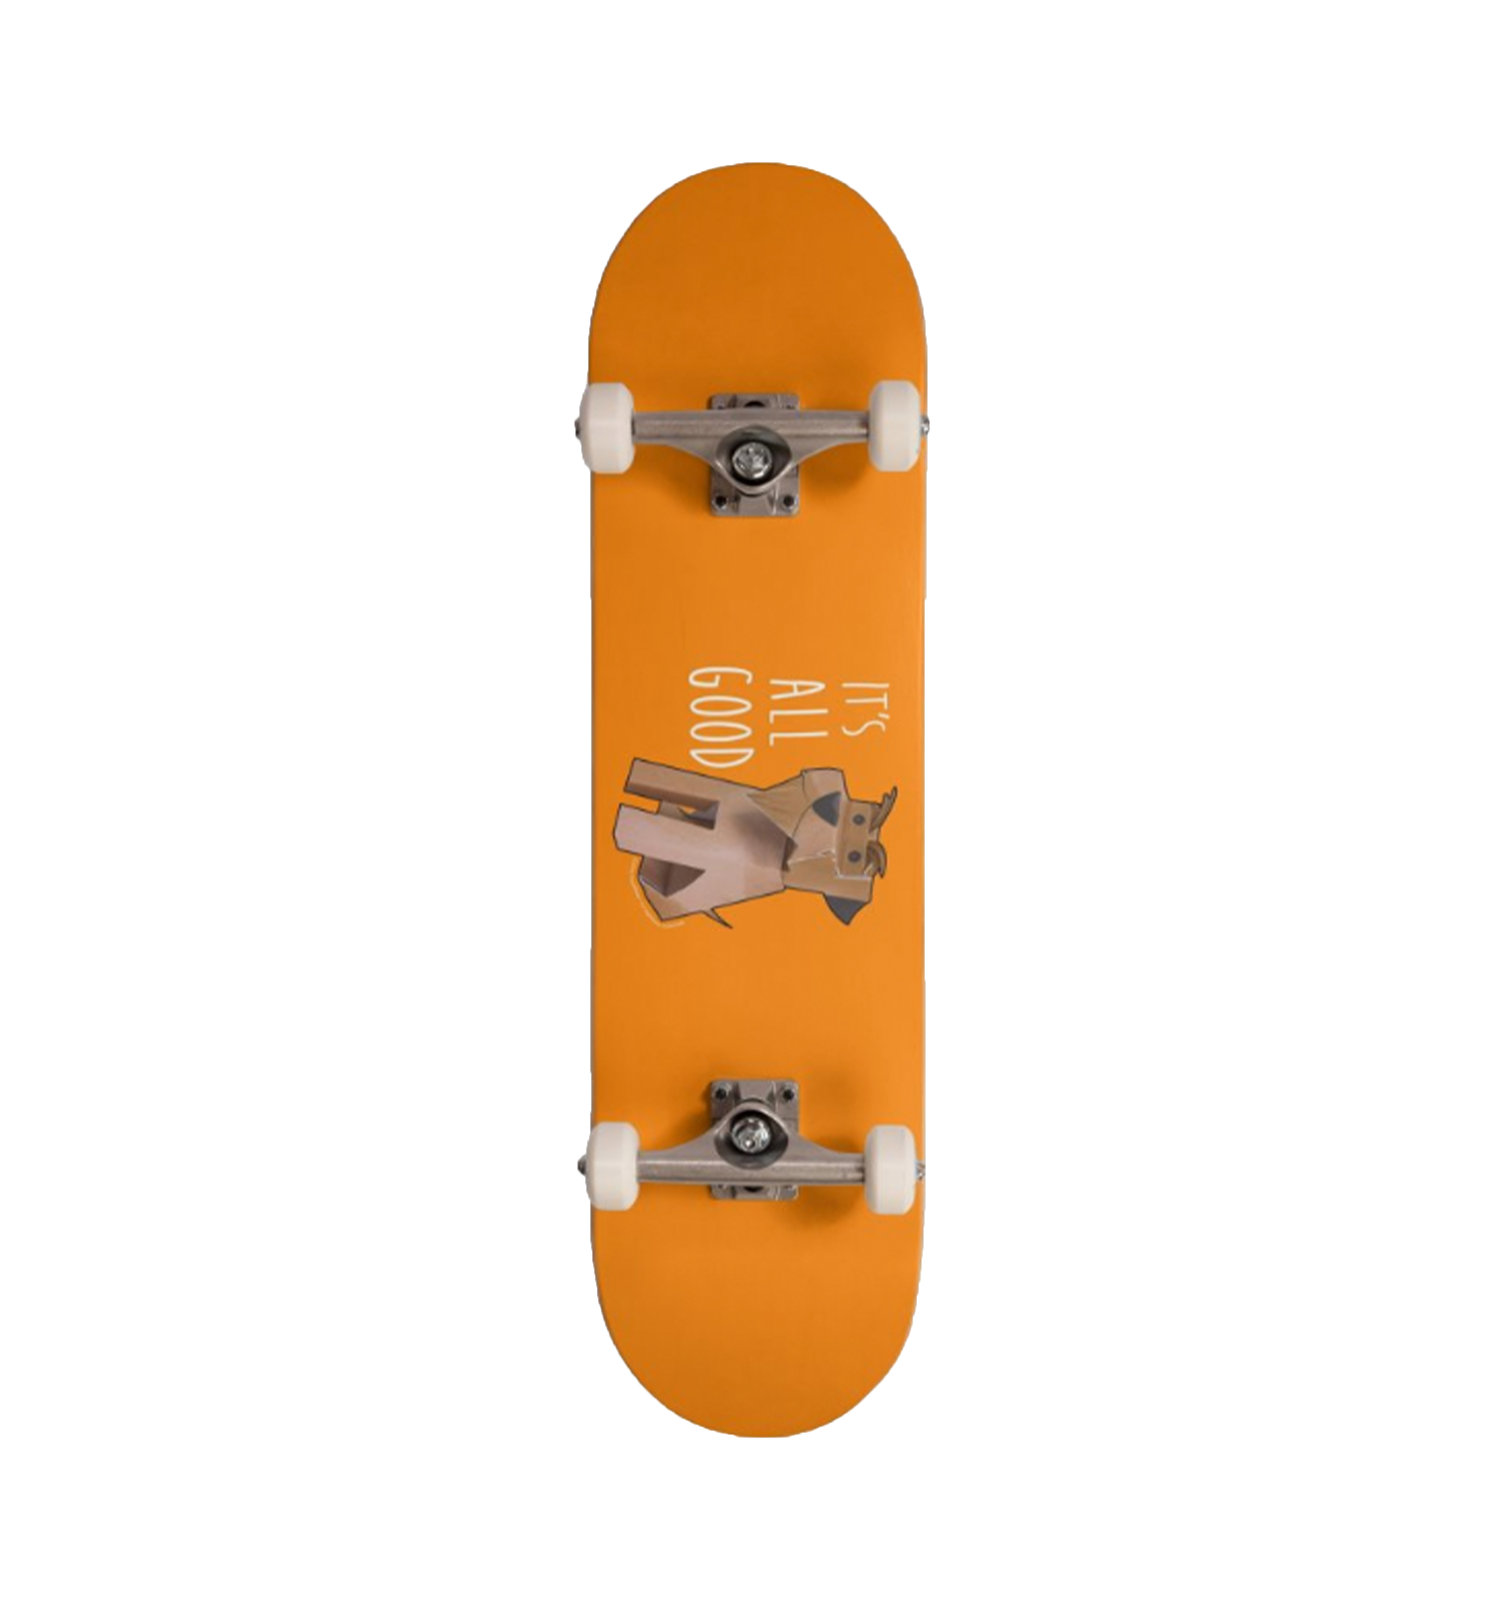 Brand New! Enjoi Cute Pet 6.5" Orange Youth Micro Soft Top Skateboard Complete